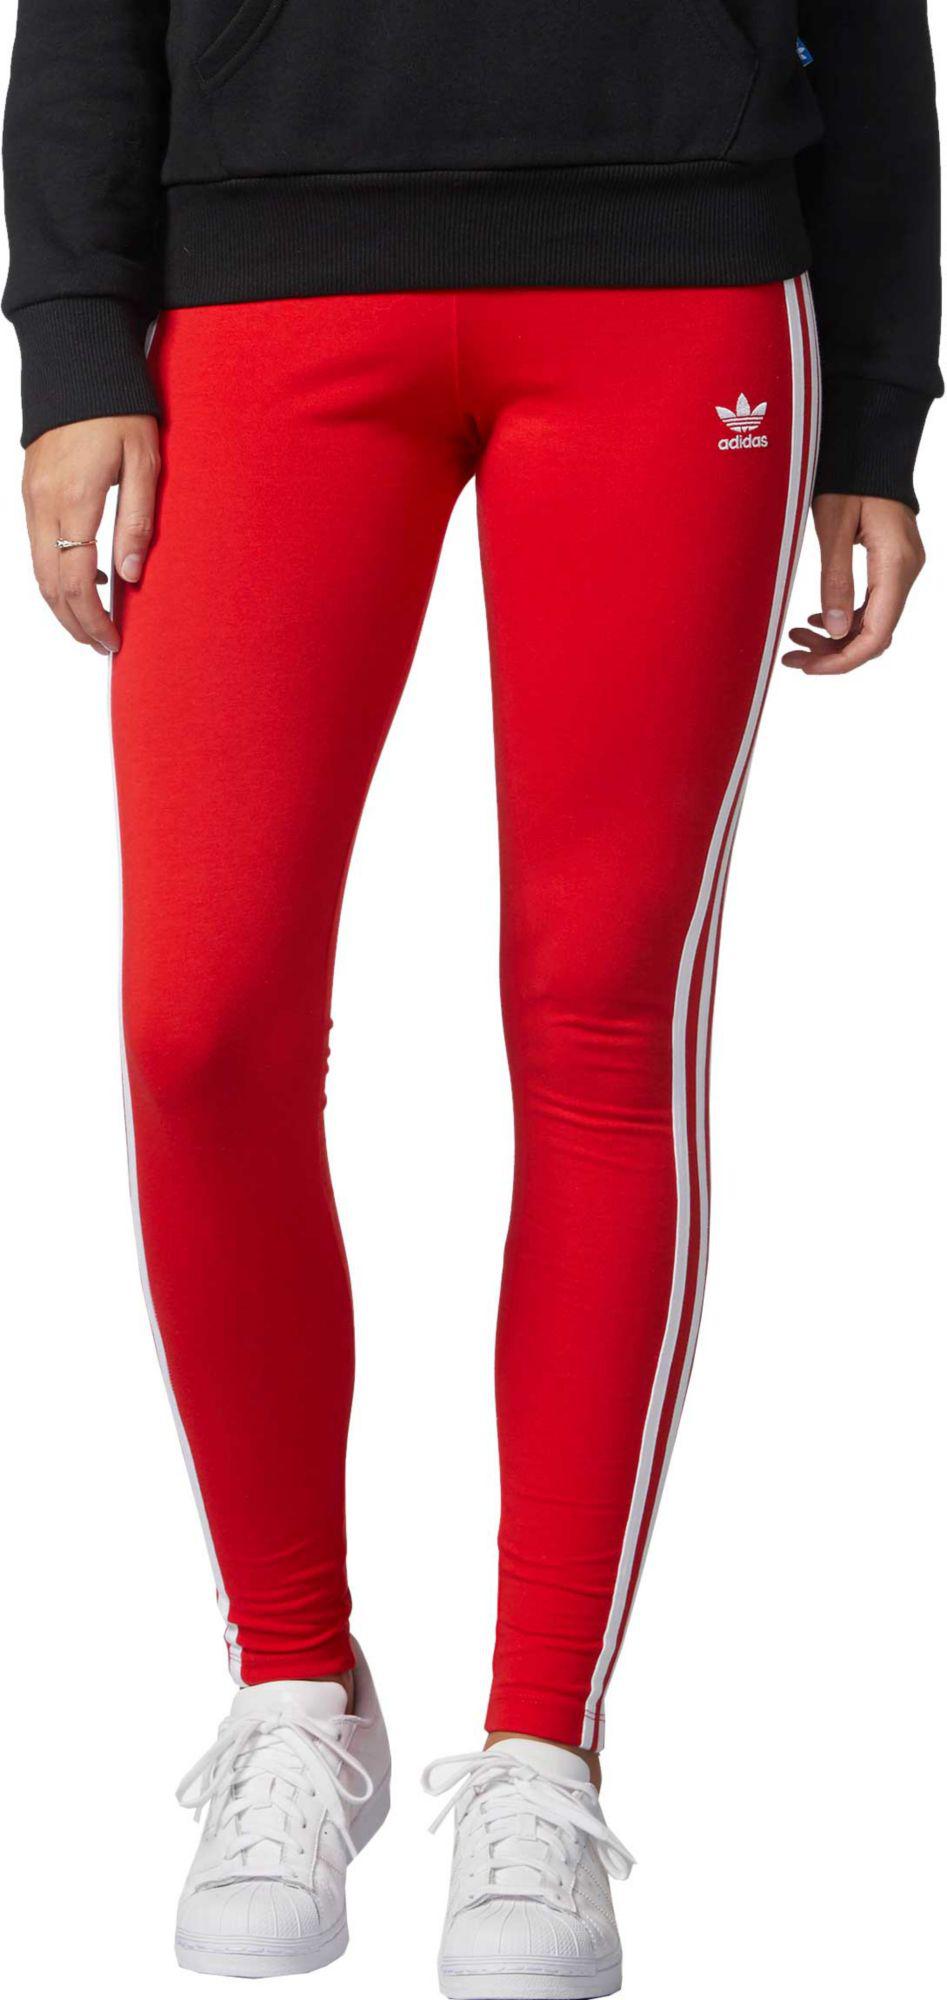 adidas leggings red stripe